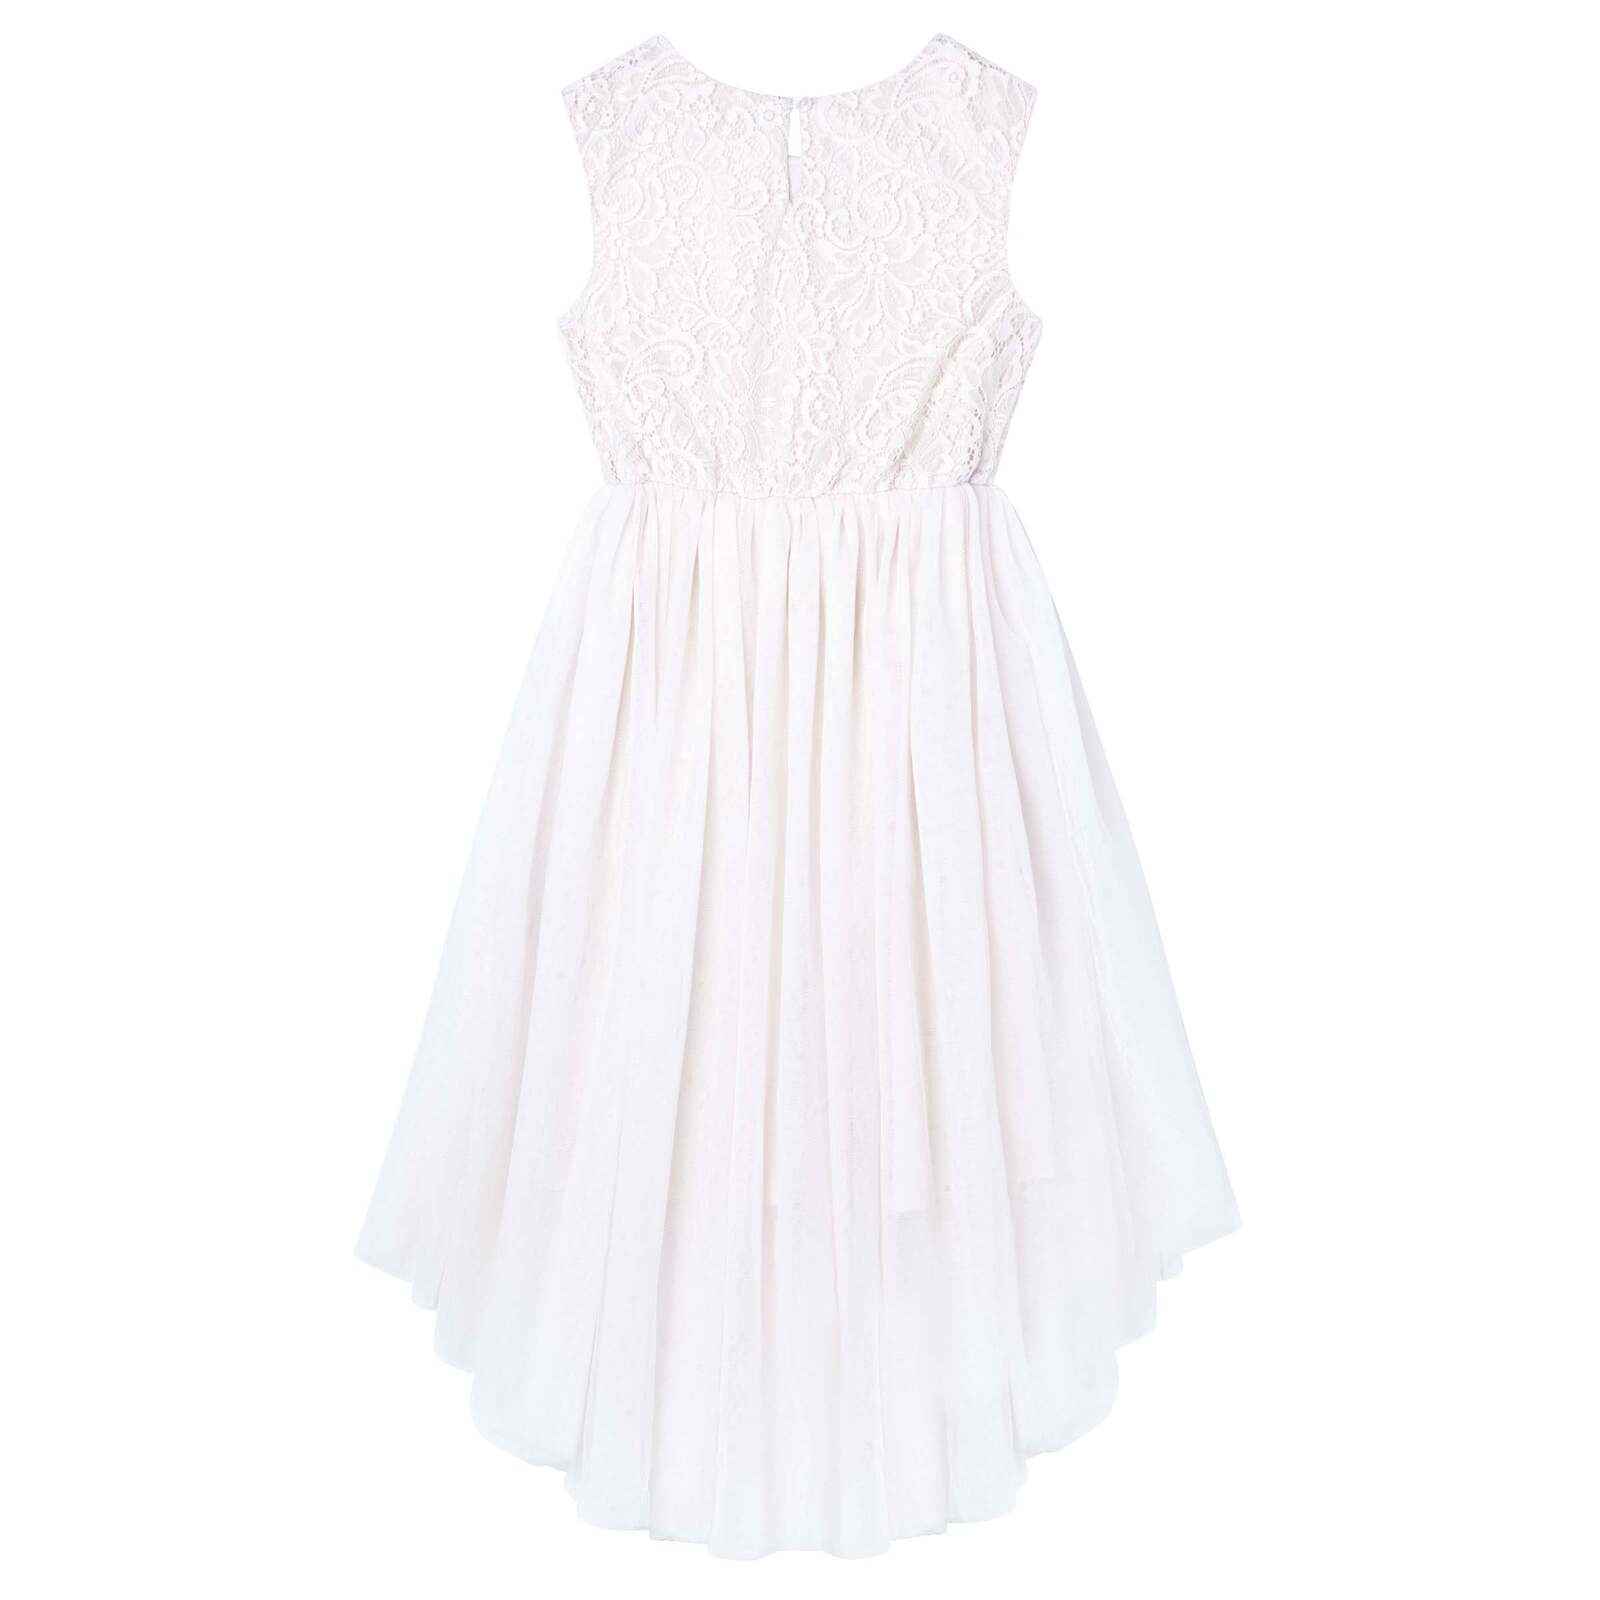 Designer Kidz Delilah S/S Lace Dress | Ivory